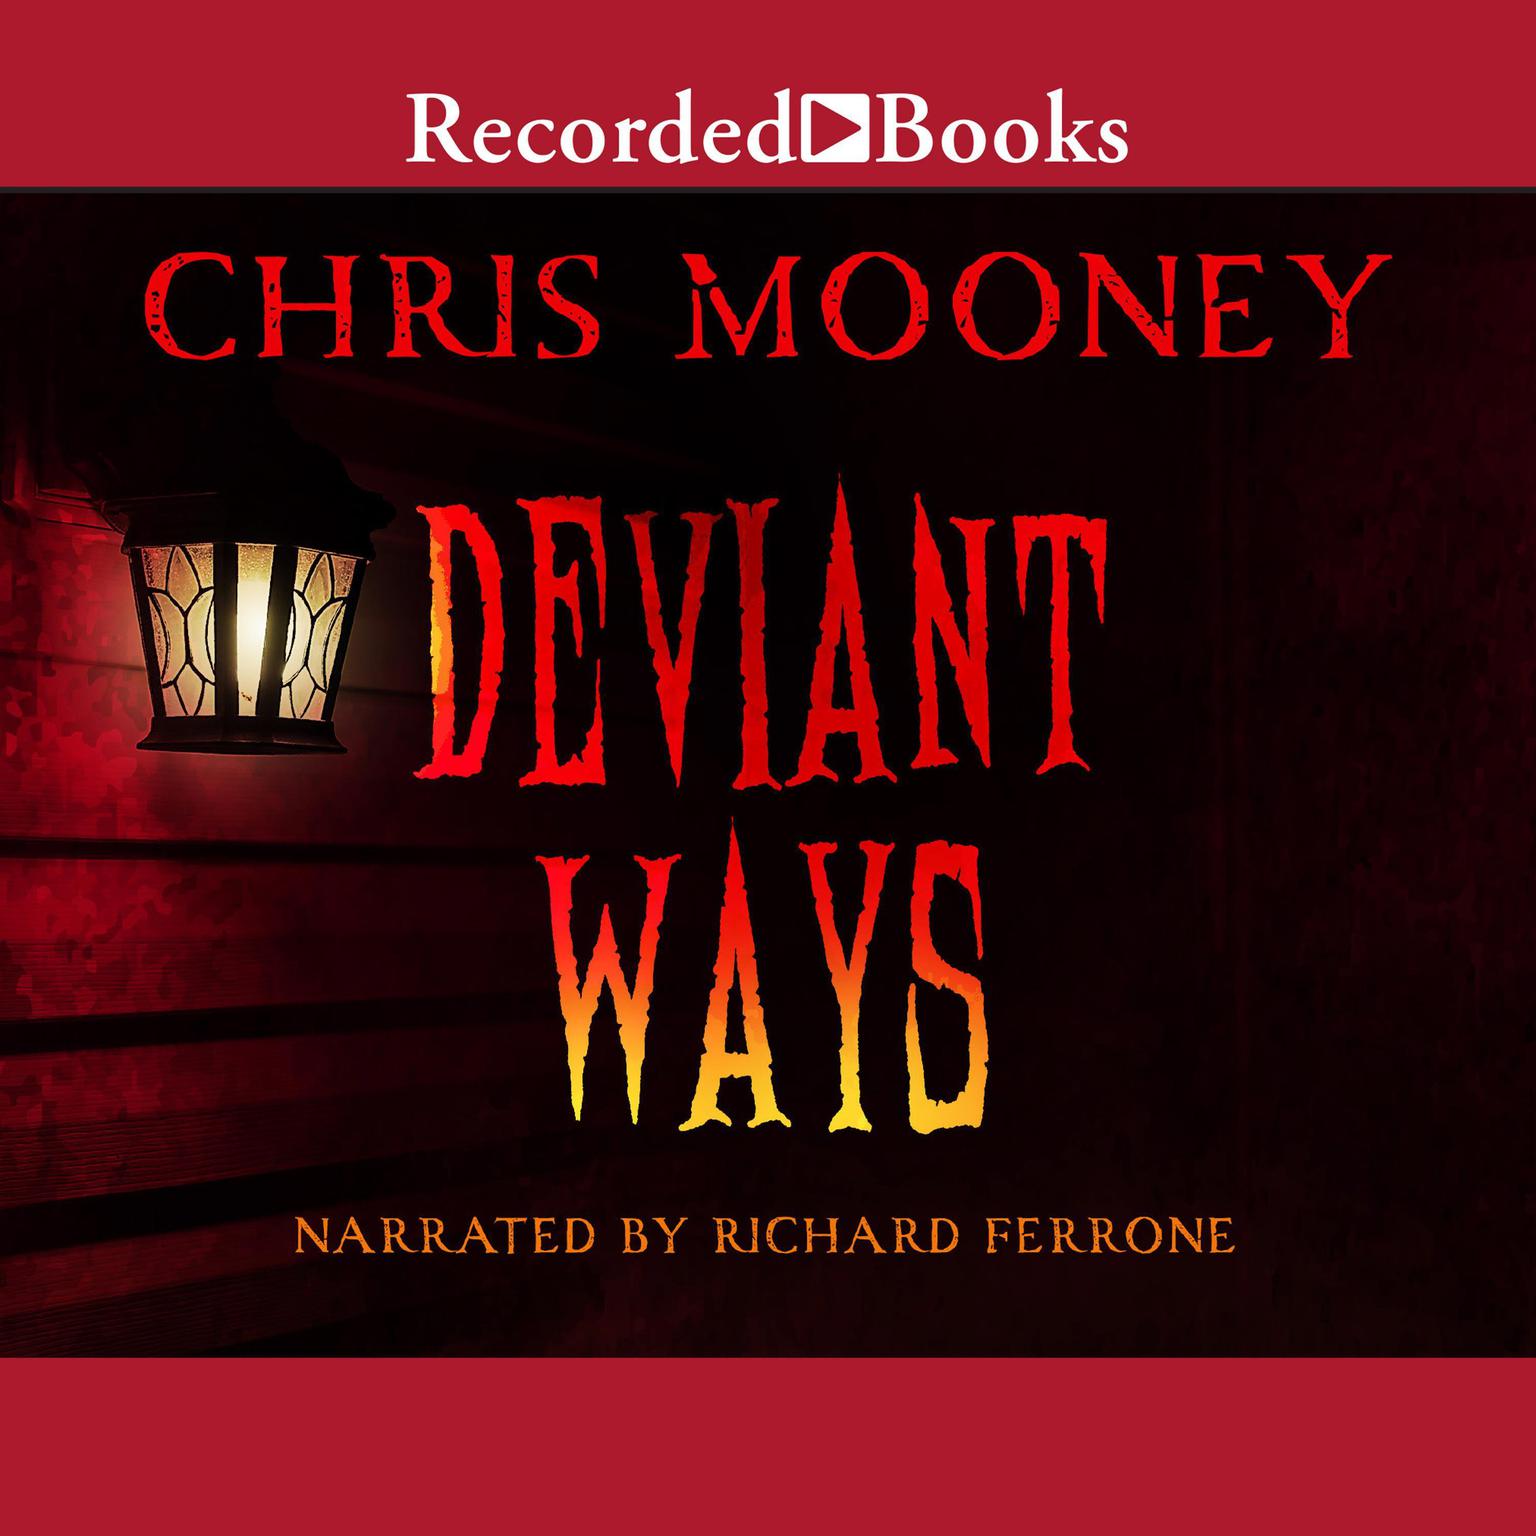 Deviant Ways Audiobook, by Chris Mooney